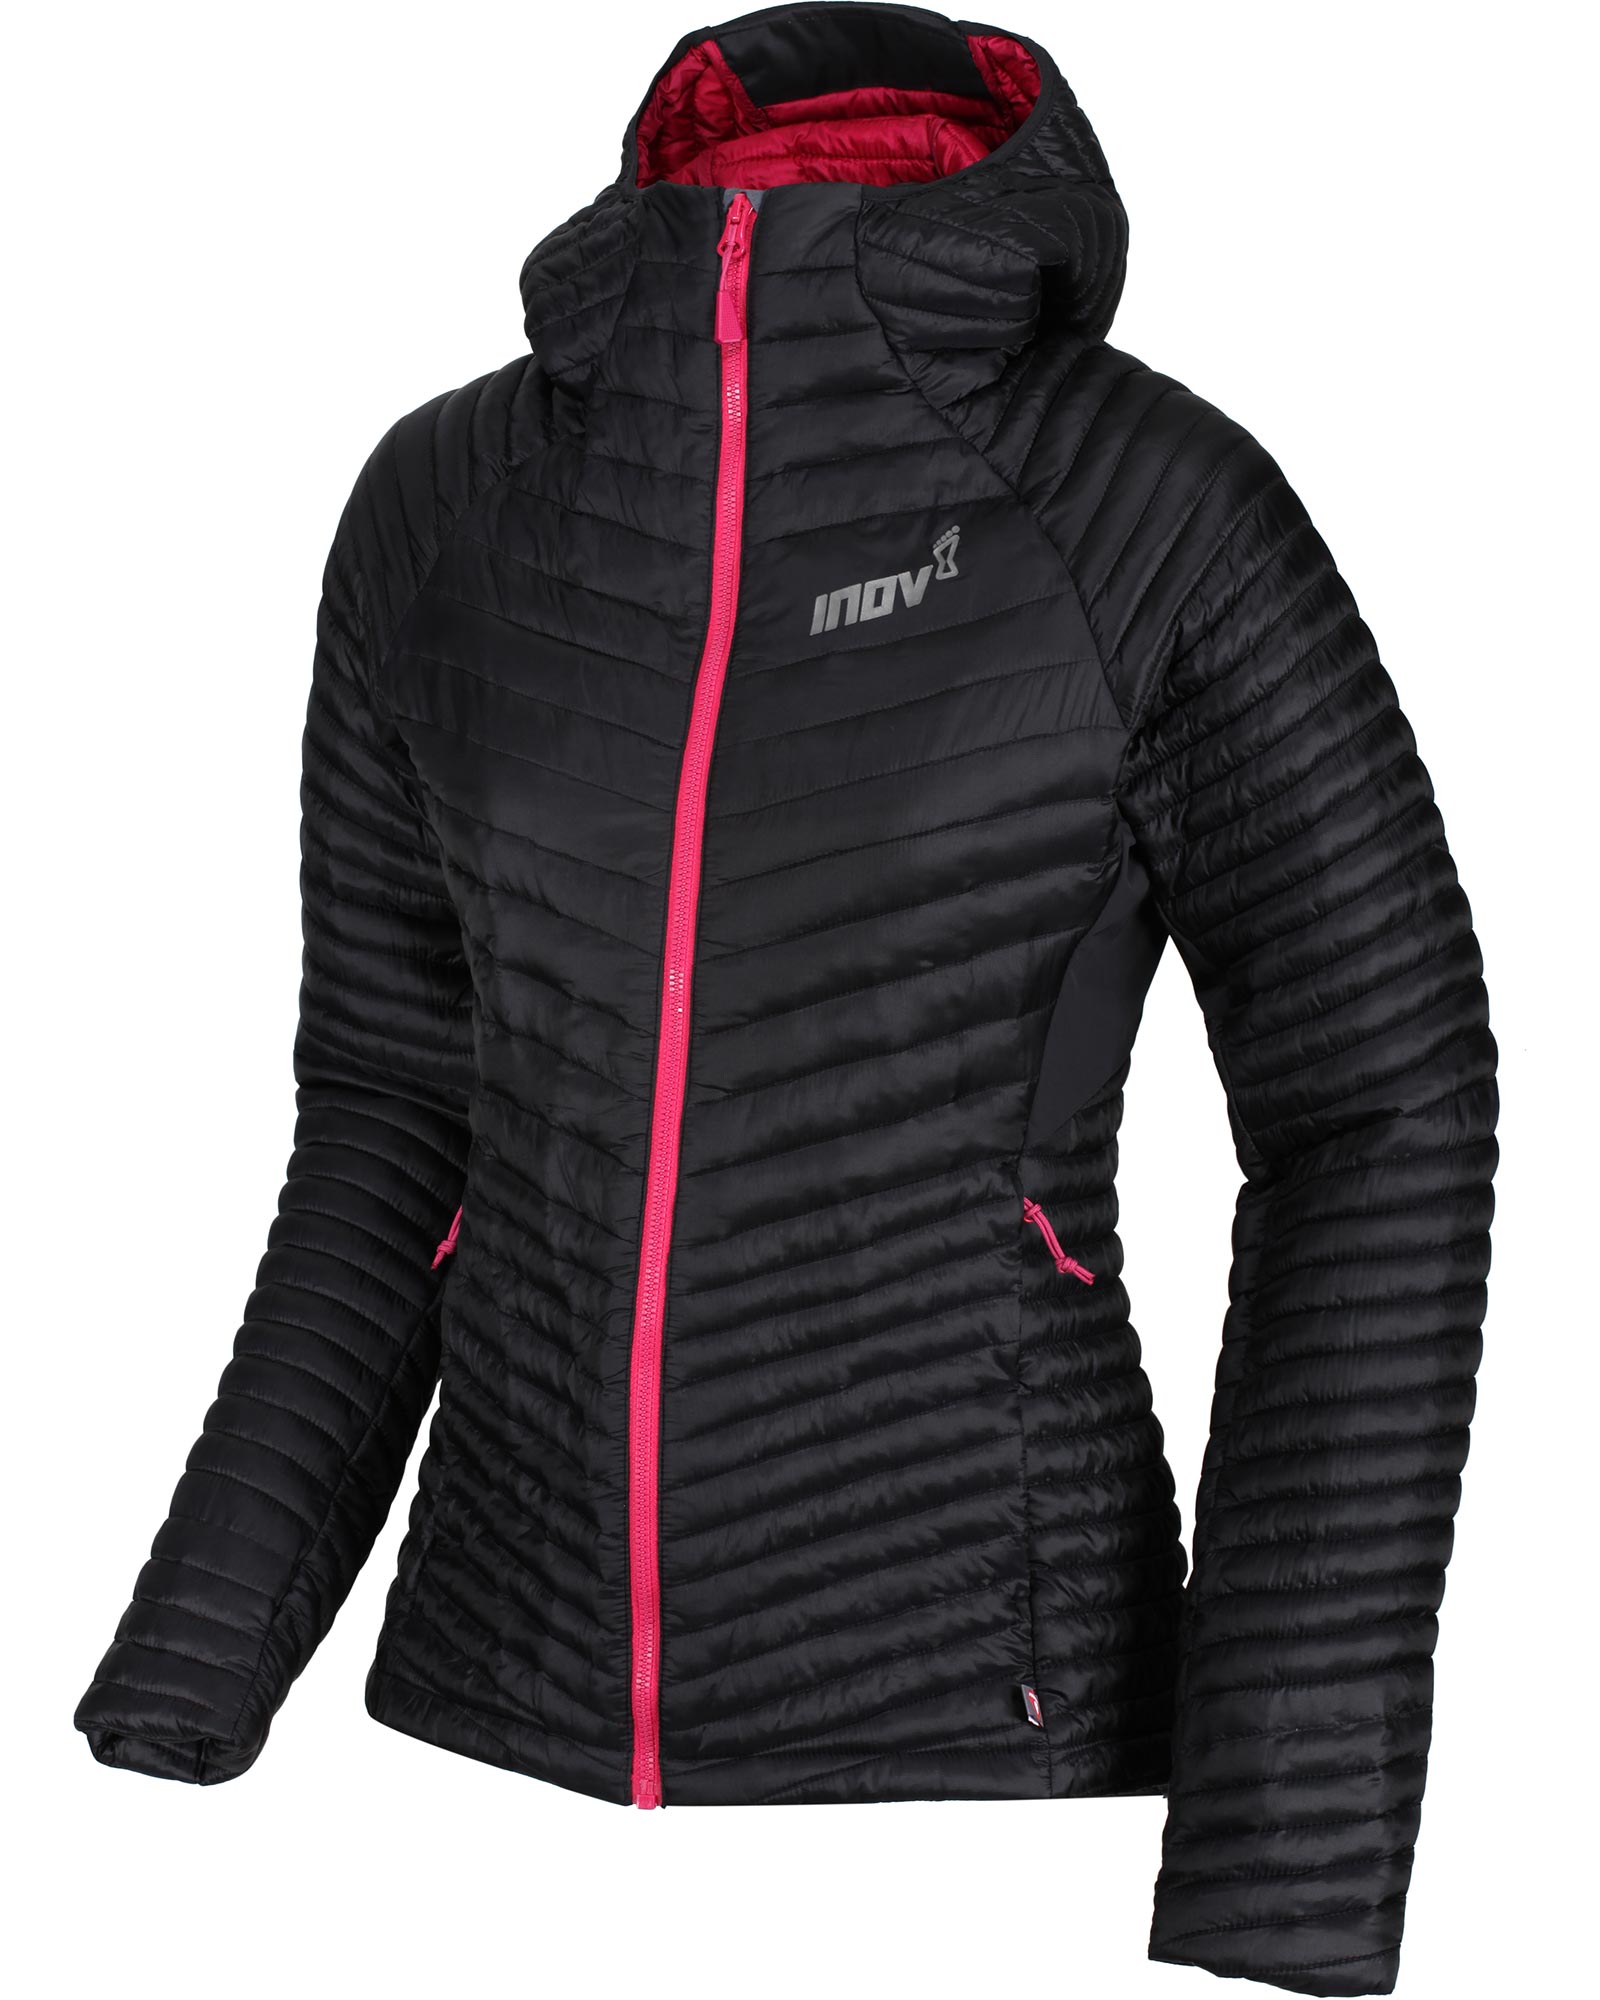 Inov 8 Full Zip Thermoshell Pro Women’s Jacket - black 12